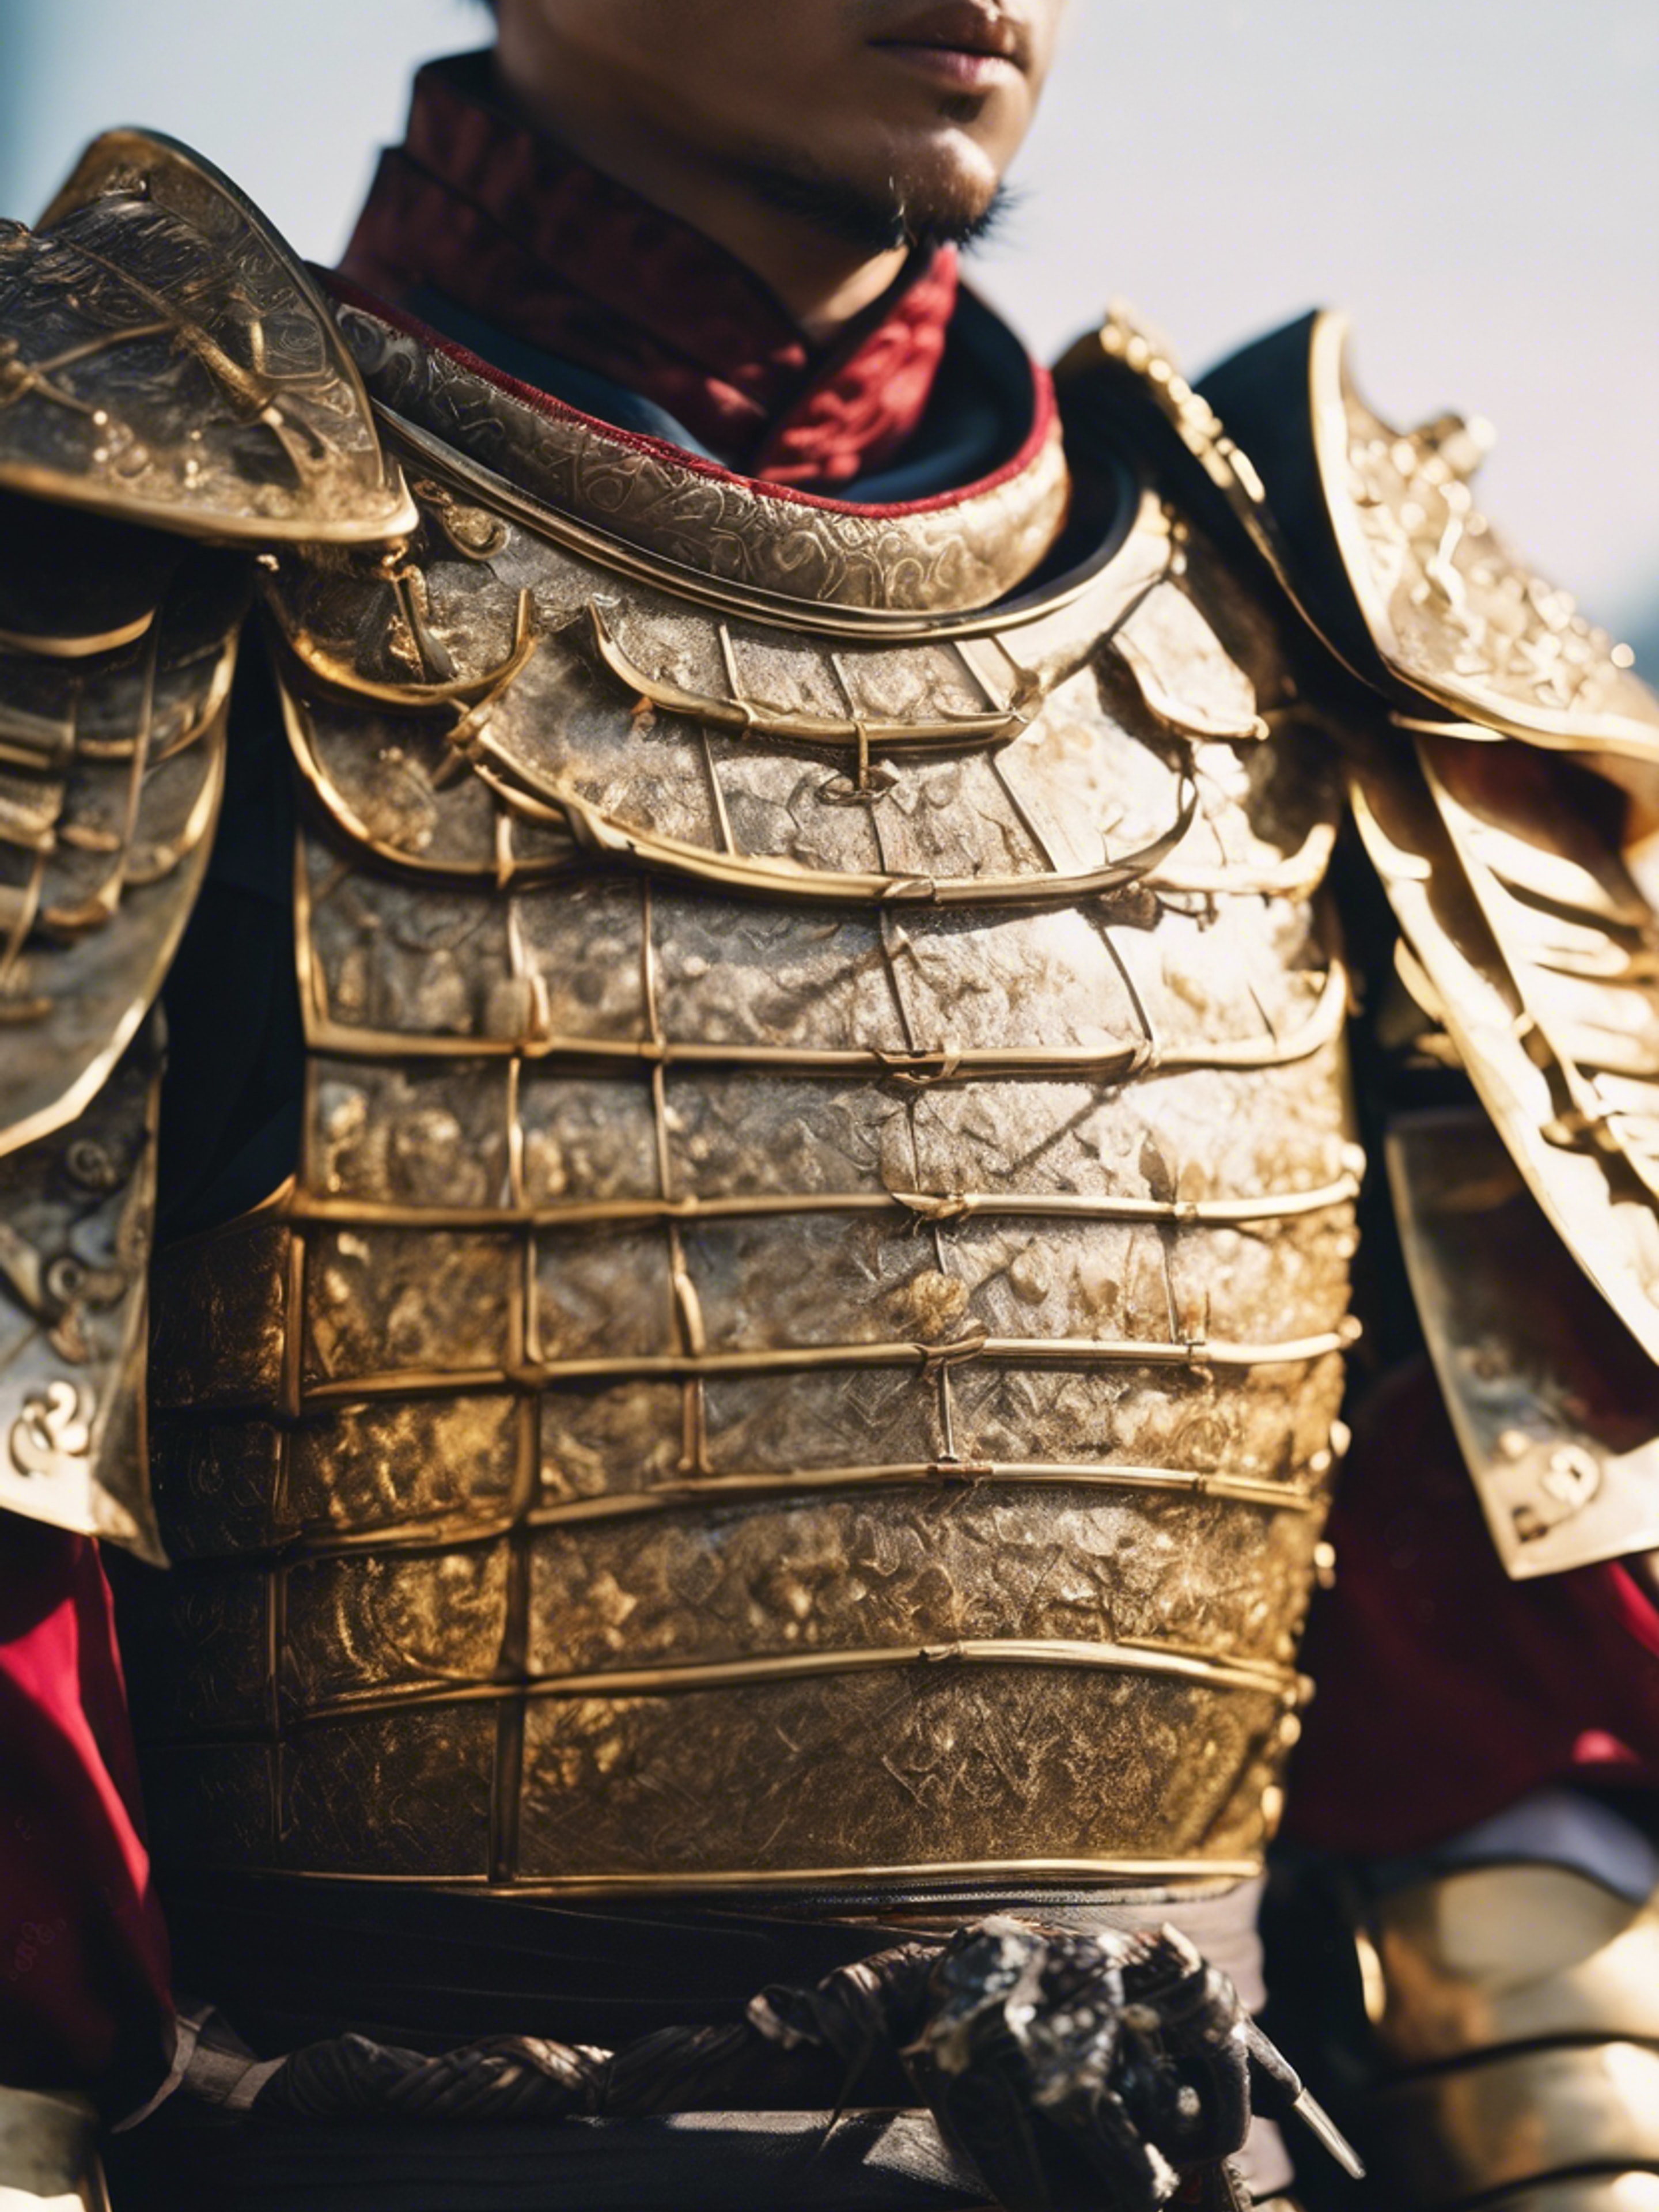 A close-up detail of a beautiful samurai armor glistening in the sunlight کاغذ دیواری[f86ed1772fa04d06b0b3]